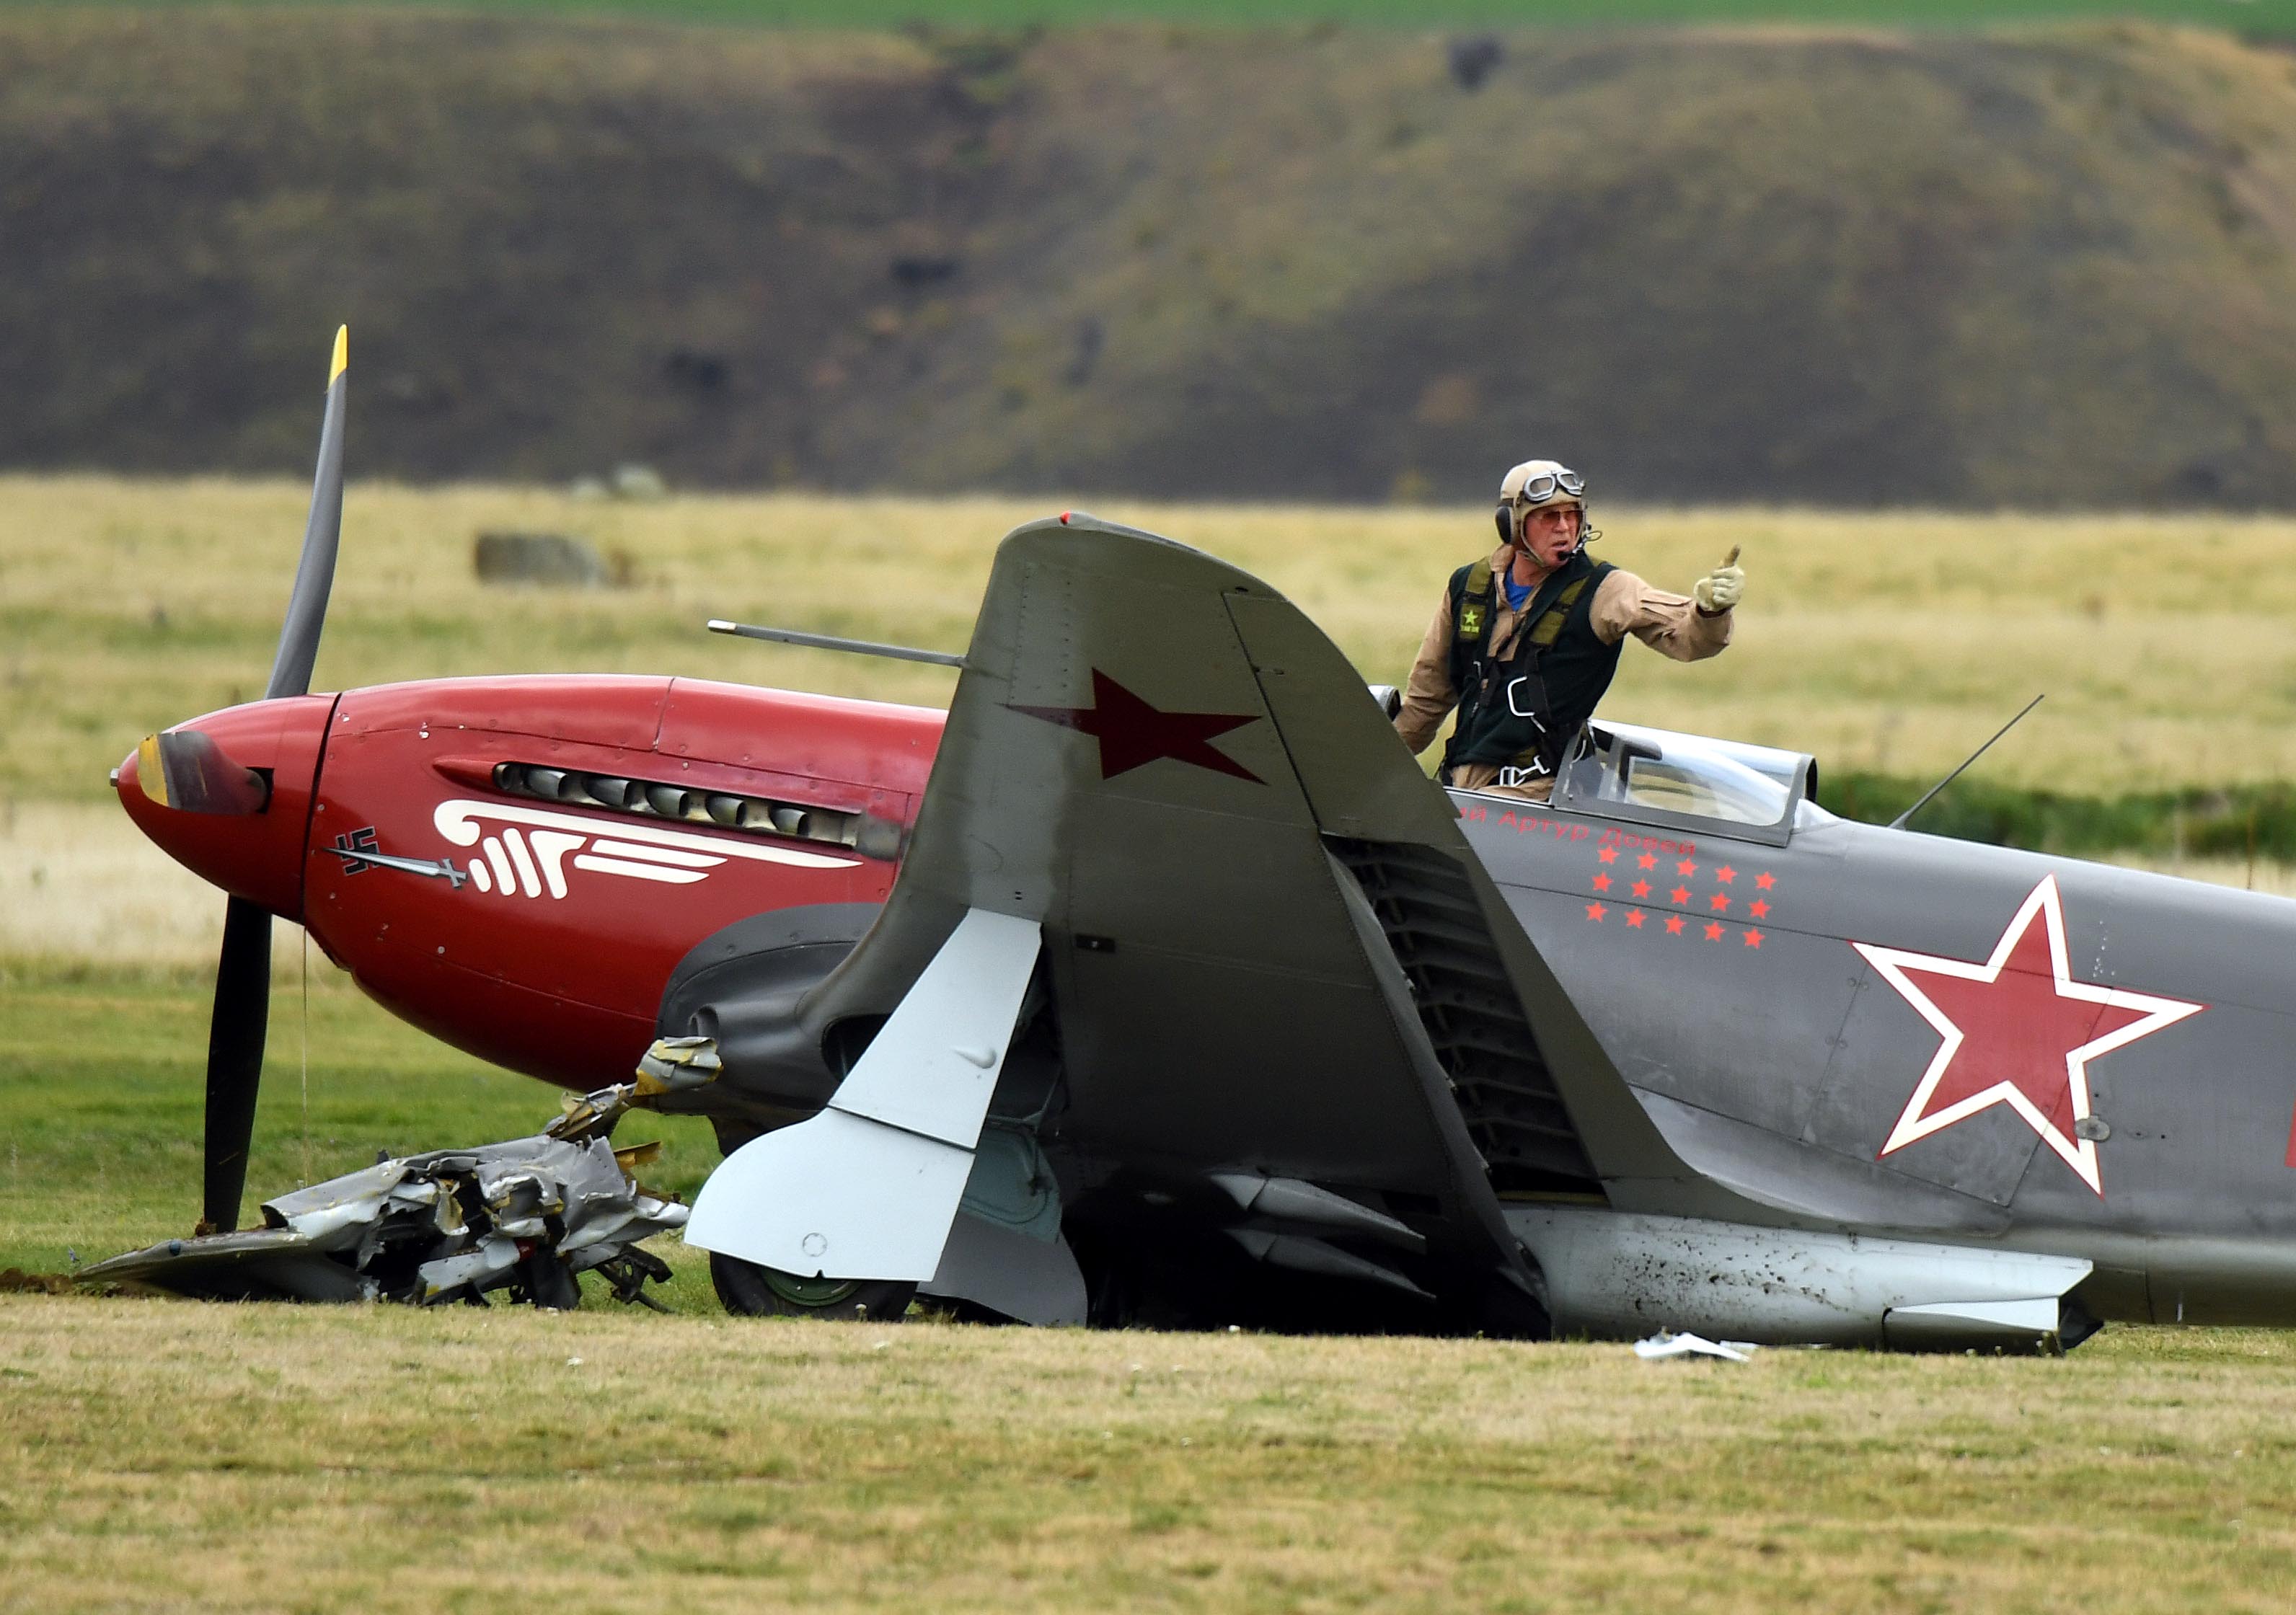 Plane crashes at Warbirds opening